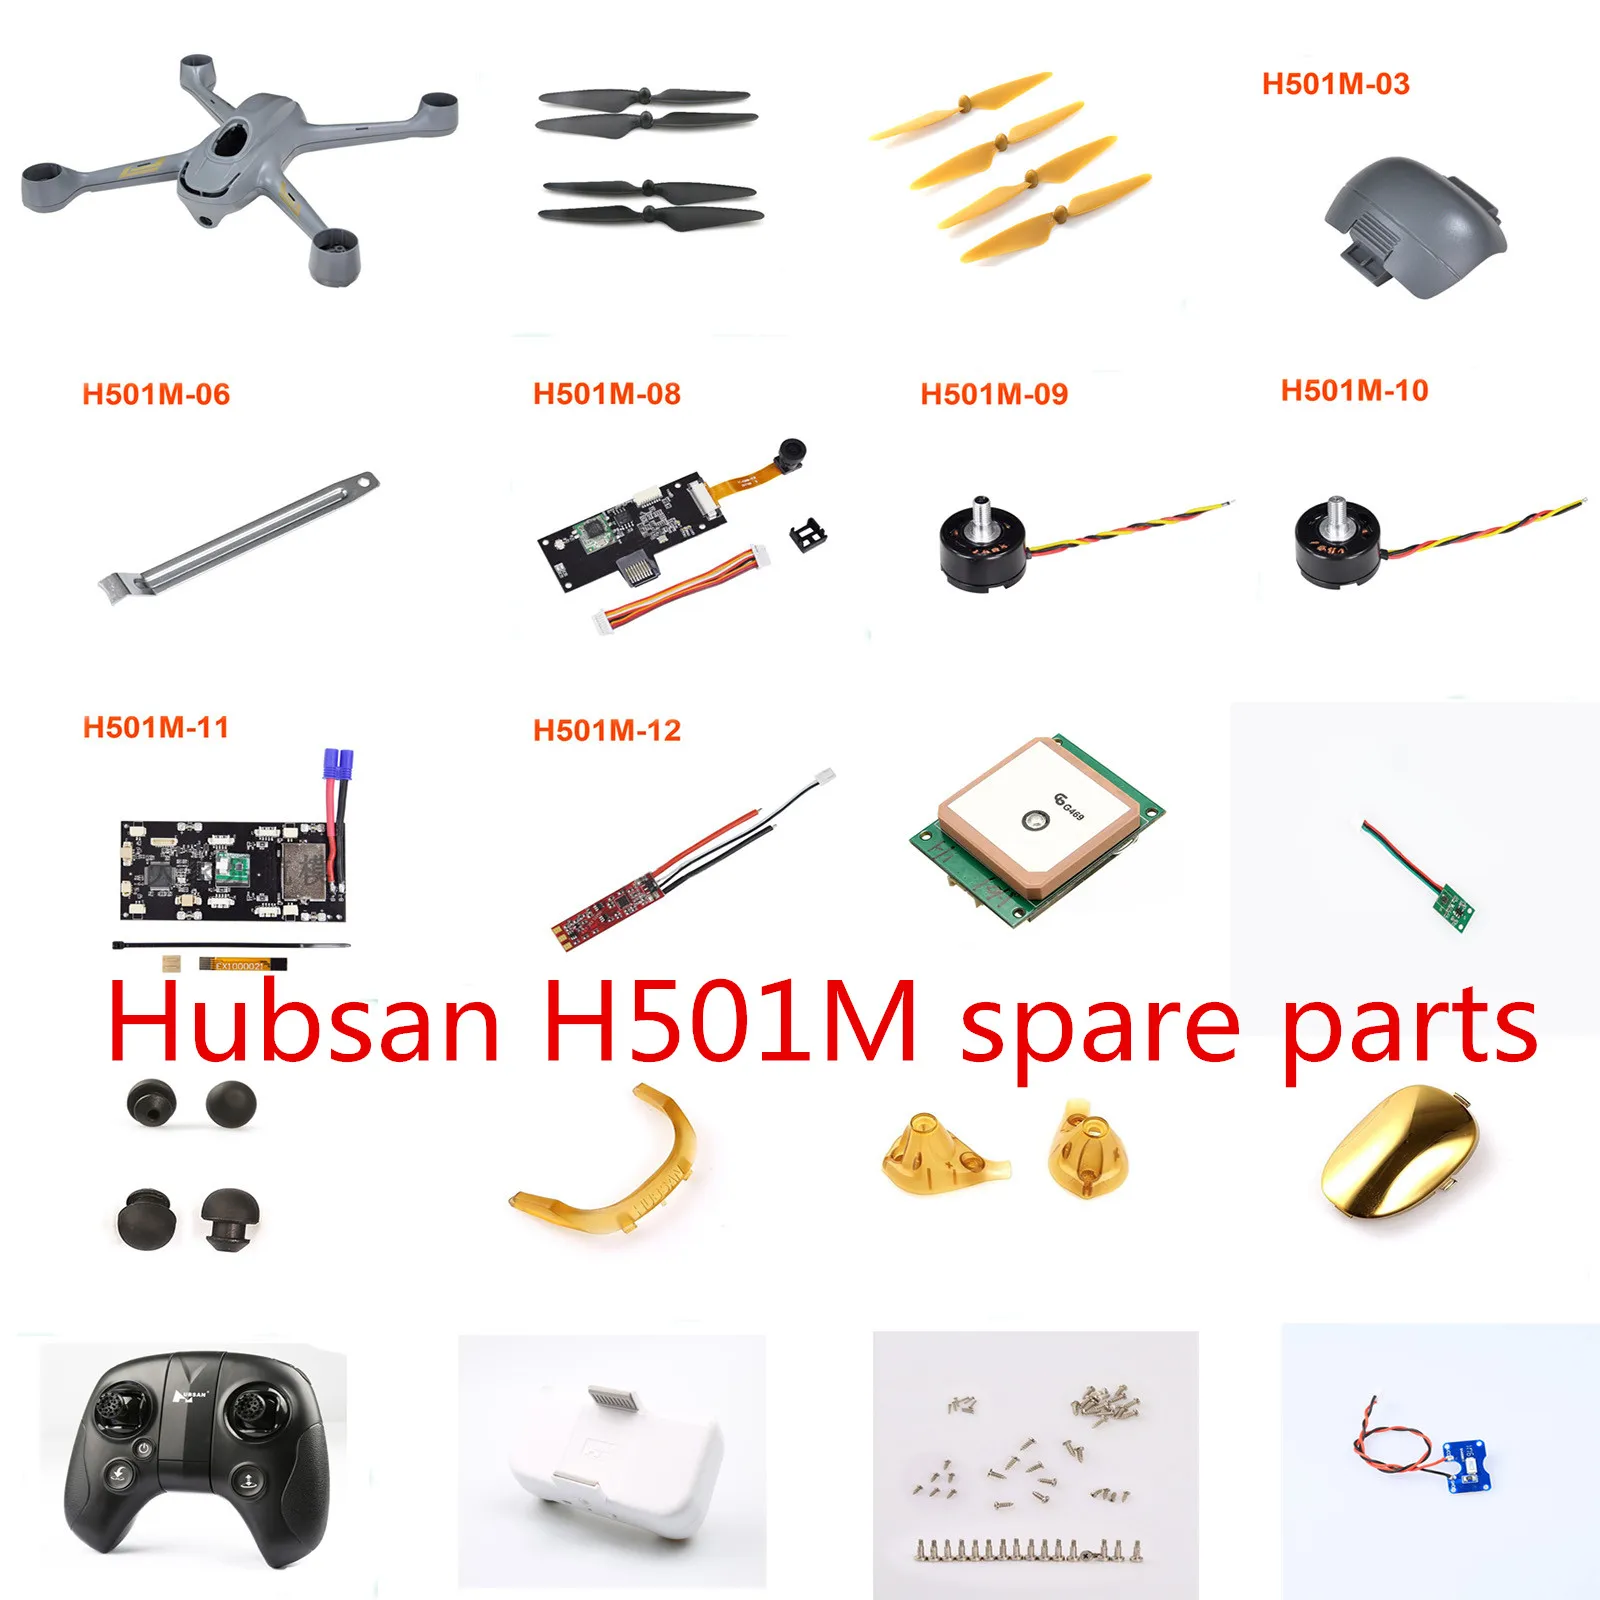 

Hubsan H501M X4 RC Drone Quadcopter spare parts blade motor ESC receiver Camera board GPS body shell LED remote control etc